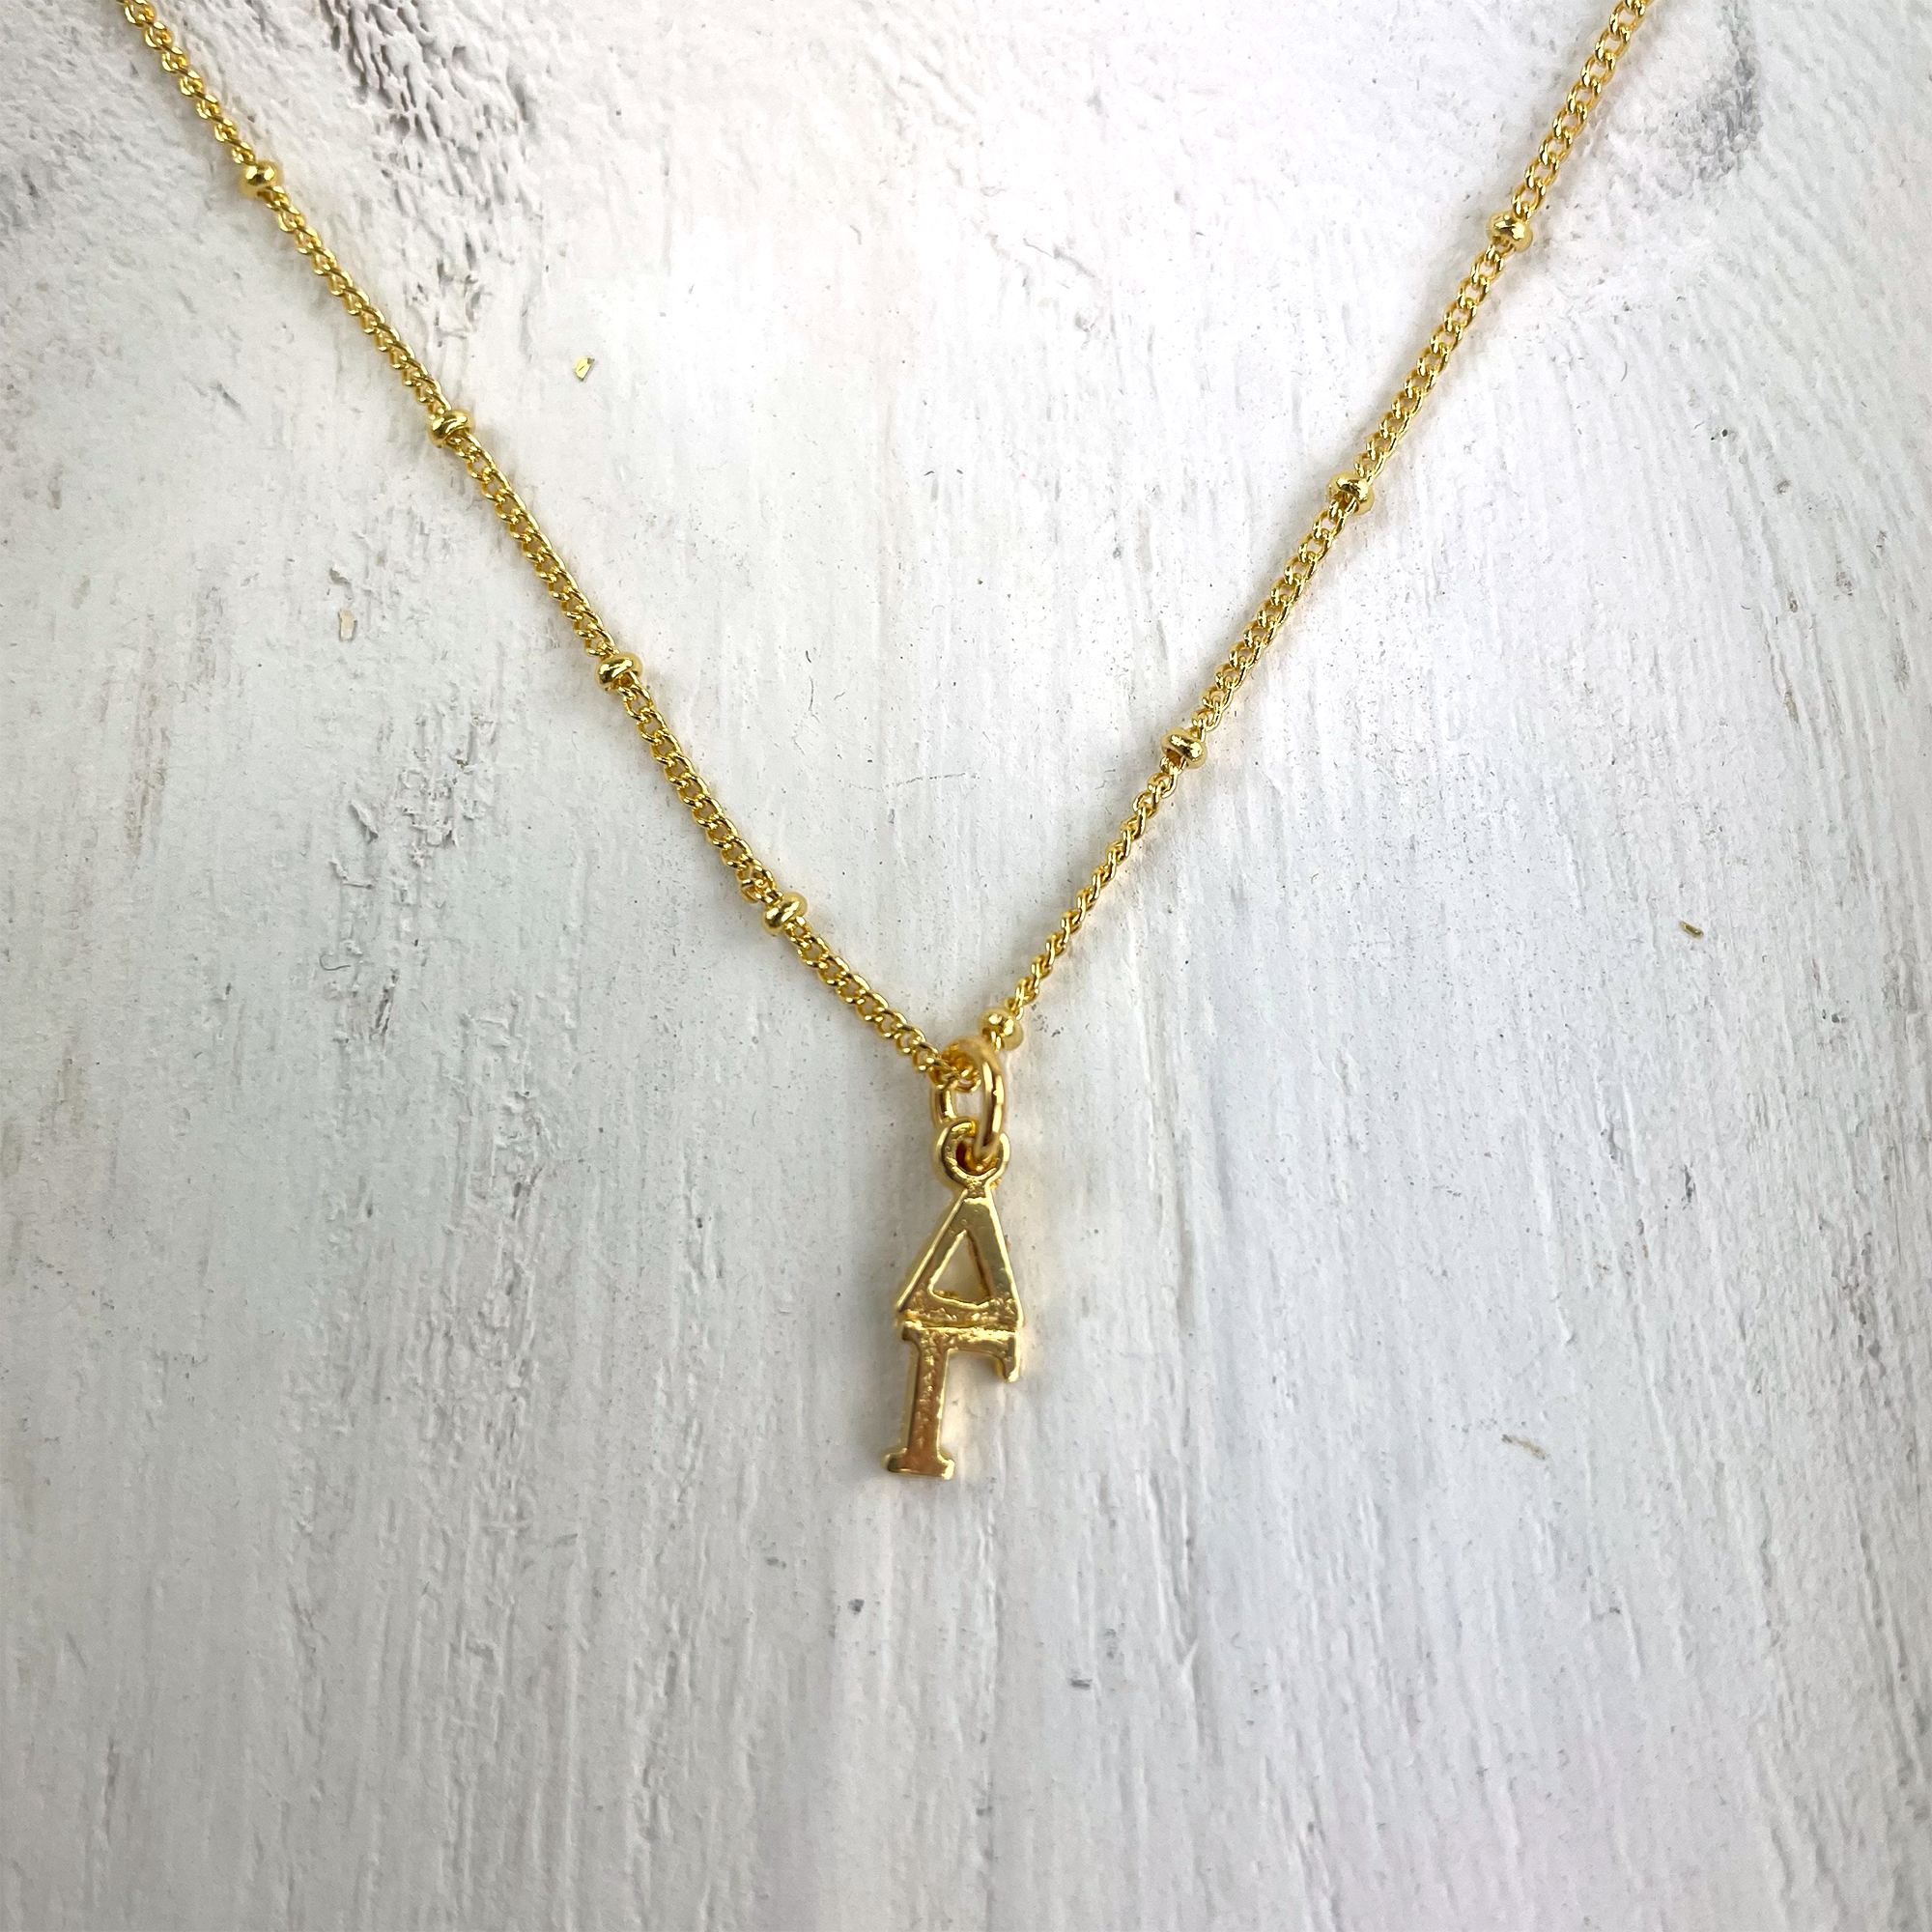 Delta Gamma Lavaliere Gold Necklace - Go Greek Chic